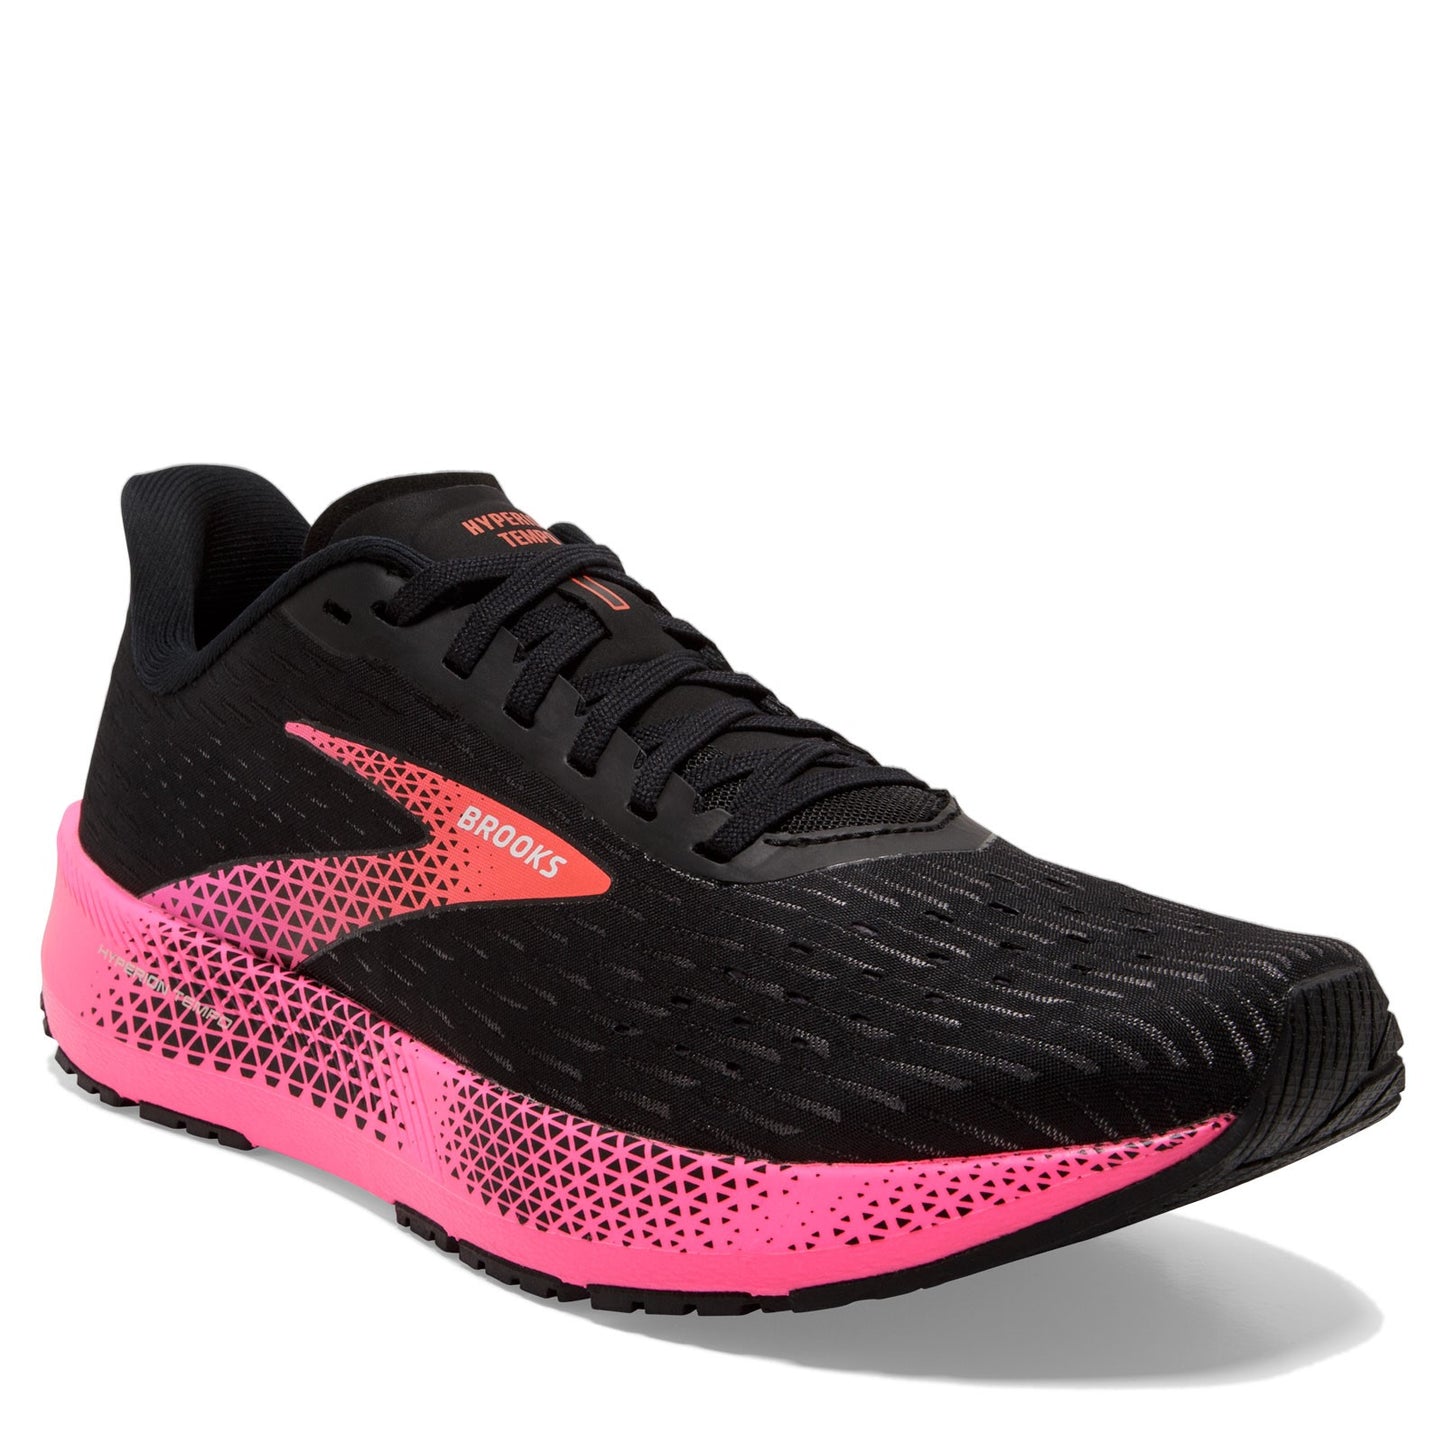 Peltz Shoes  Women's Brooks Hyperion Tempo Running Shoe Black/Pink/Hot Coral 120328 1B 086